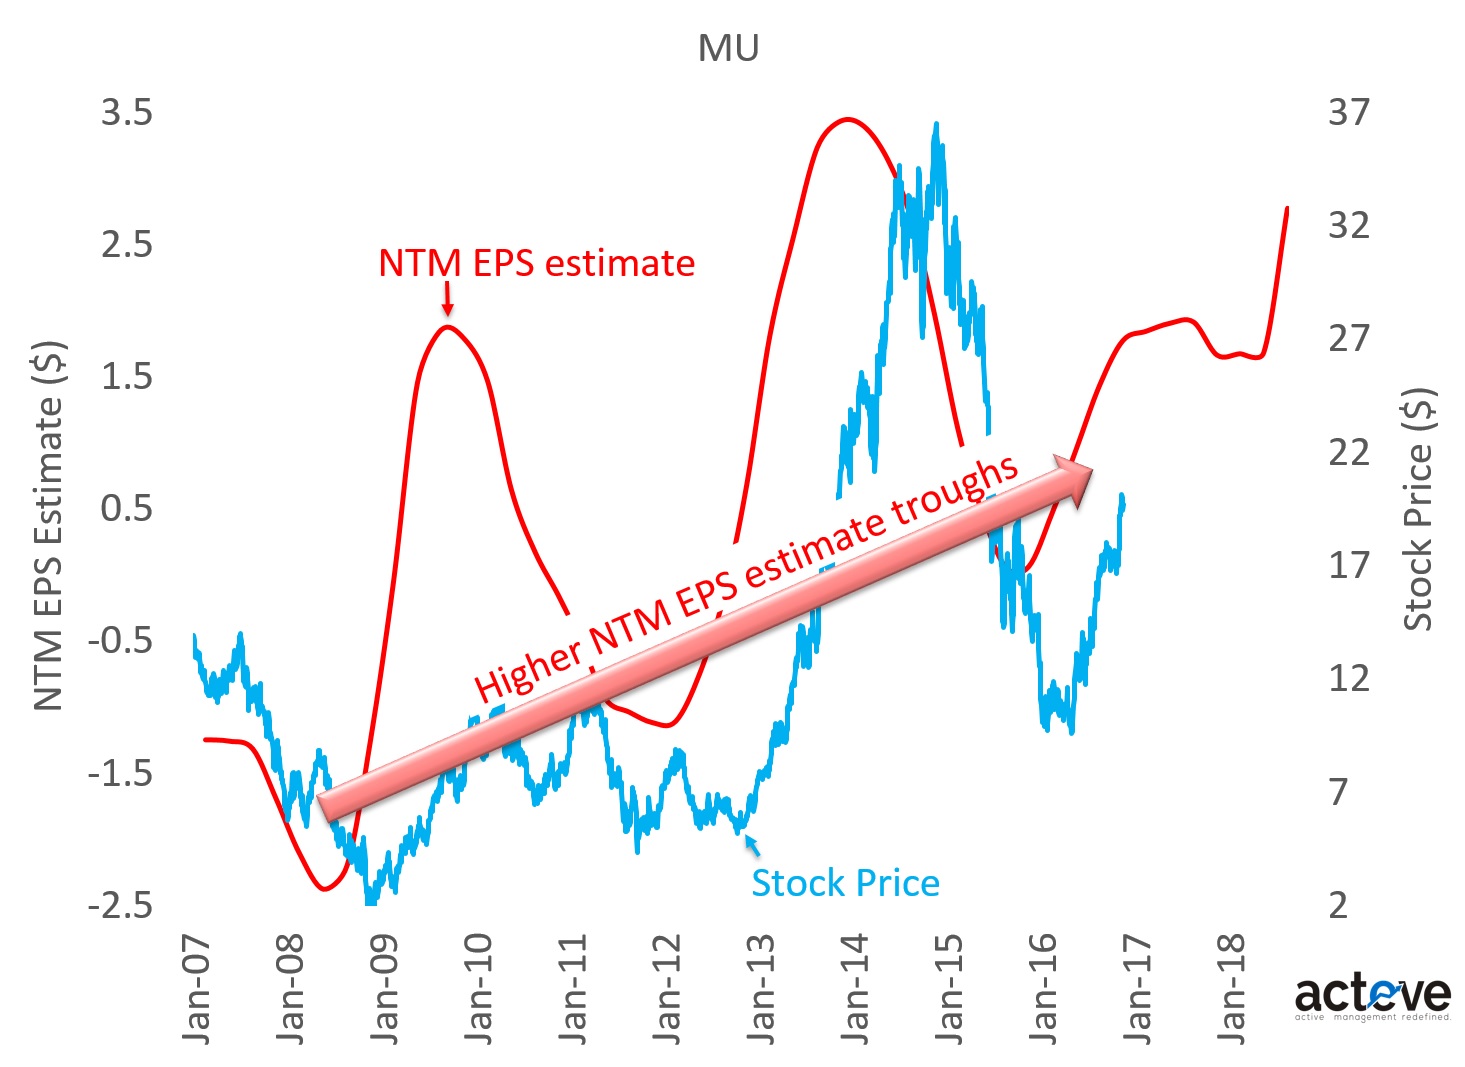 MU stock vs. NTM EPS estimates 113016